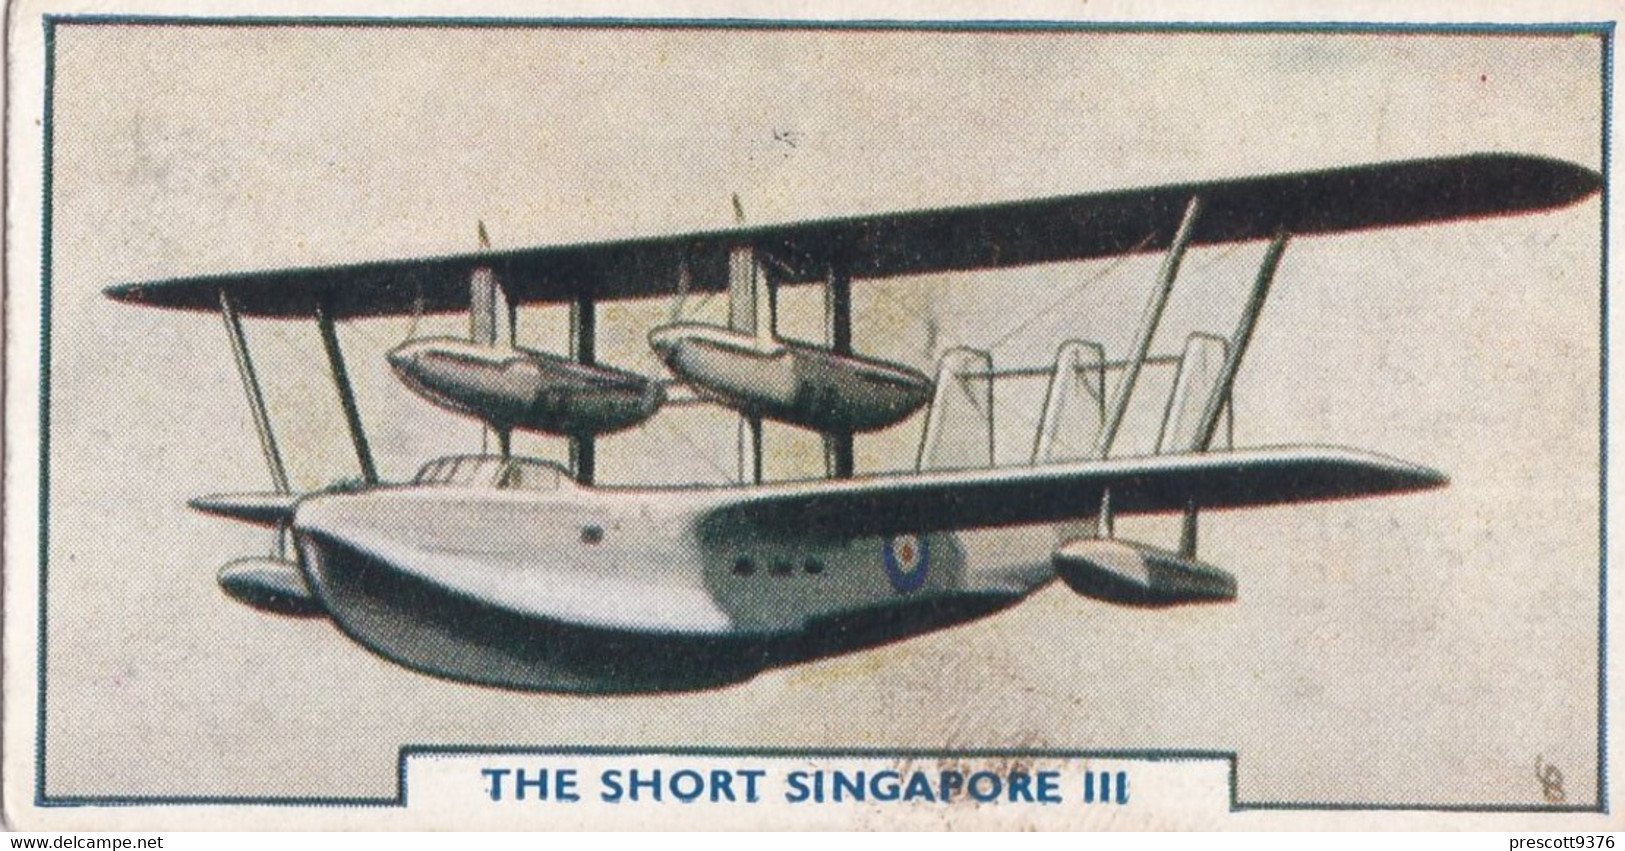 2 Short Singapore III  - Aircraft Series 1938 - Godfrey Phillips Cigarette Card - Original - Military - Travel - Phillips / BDV